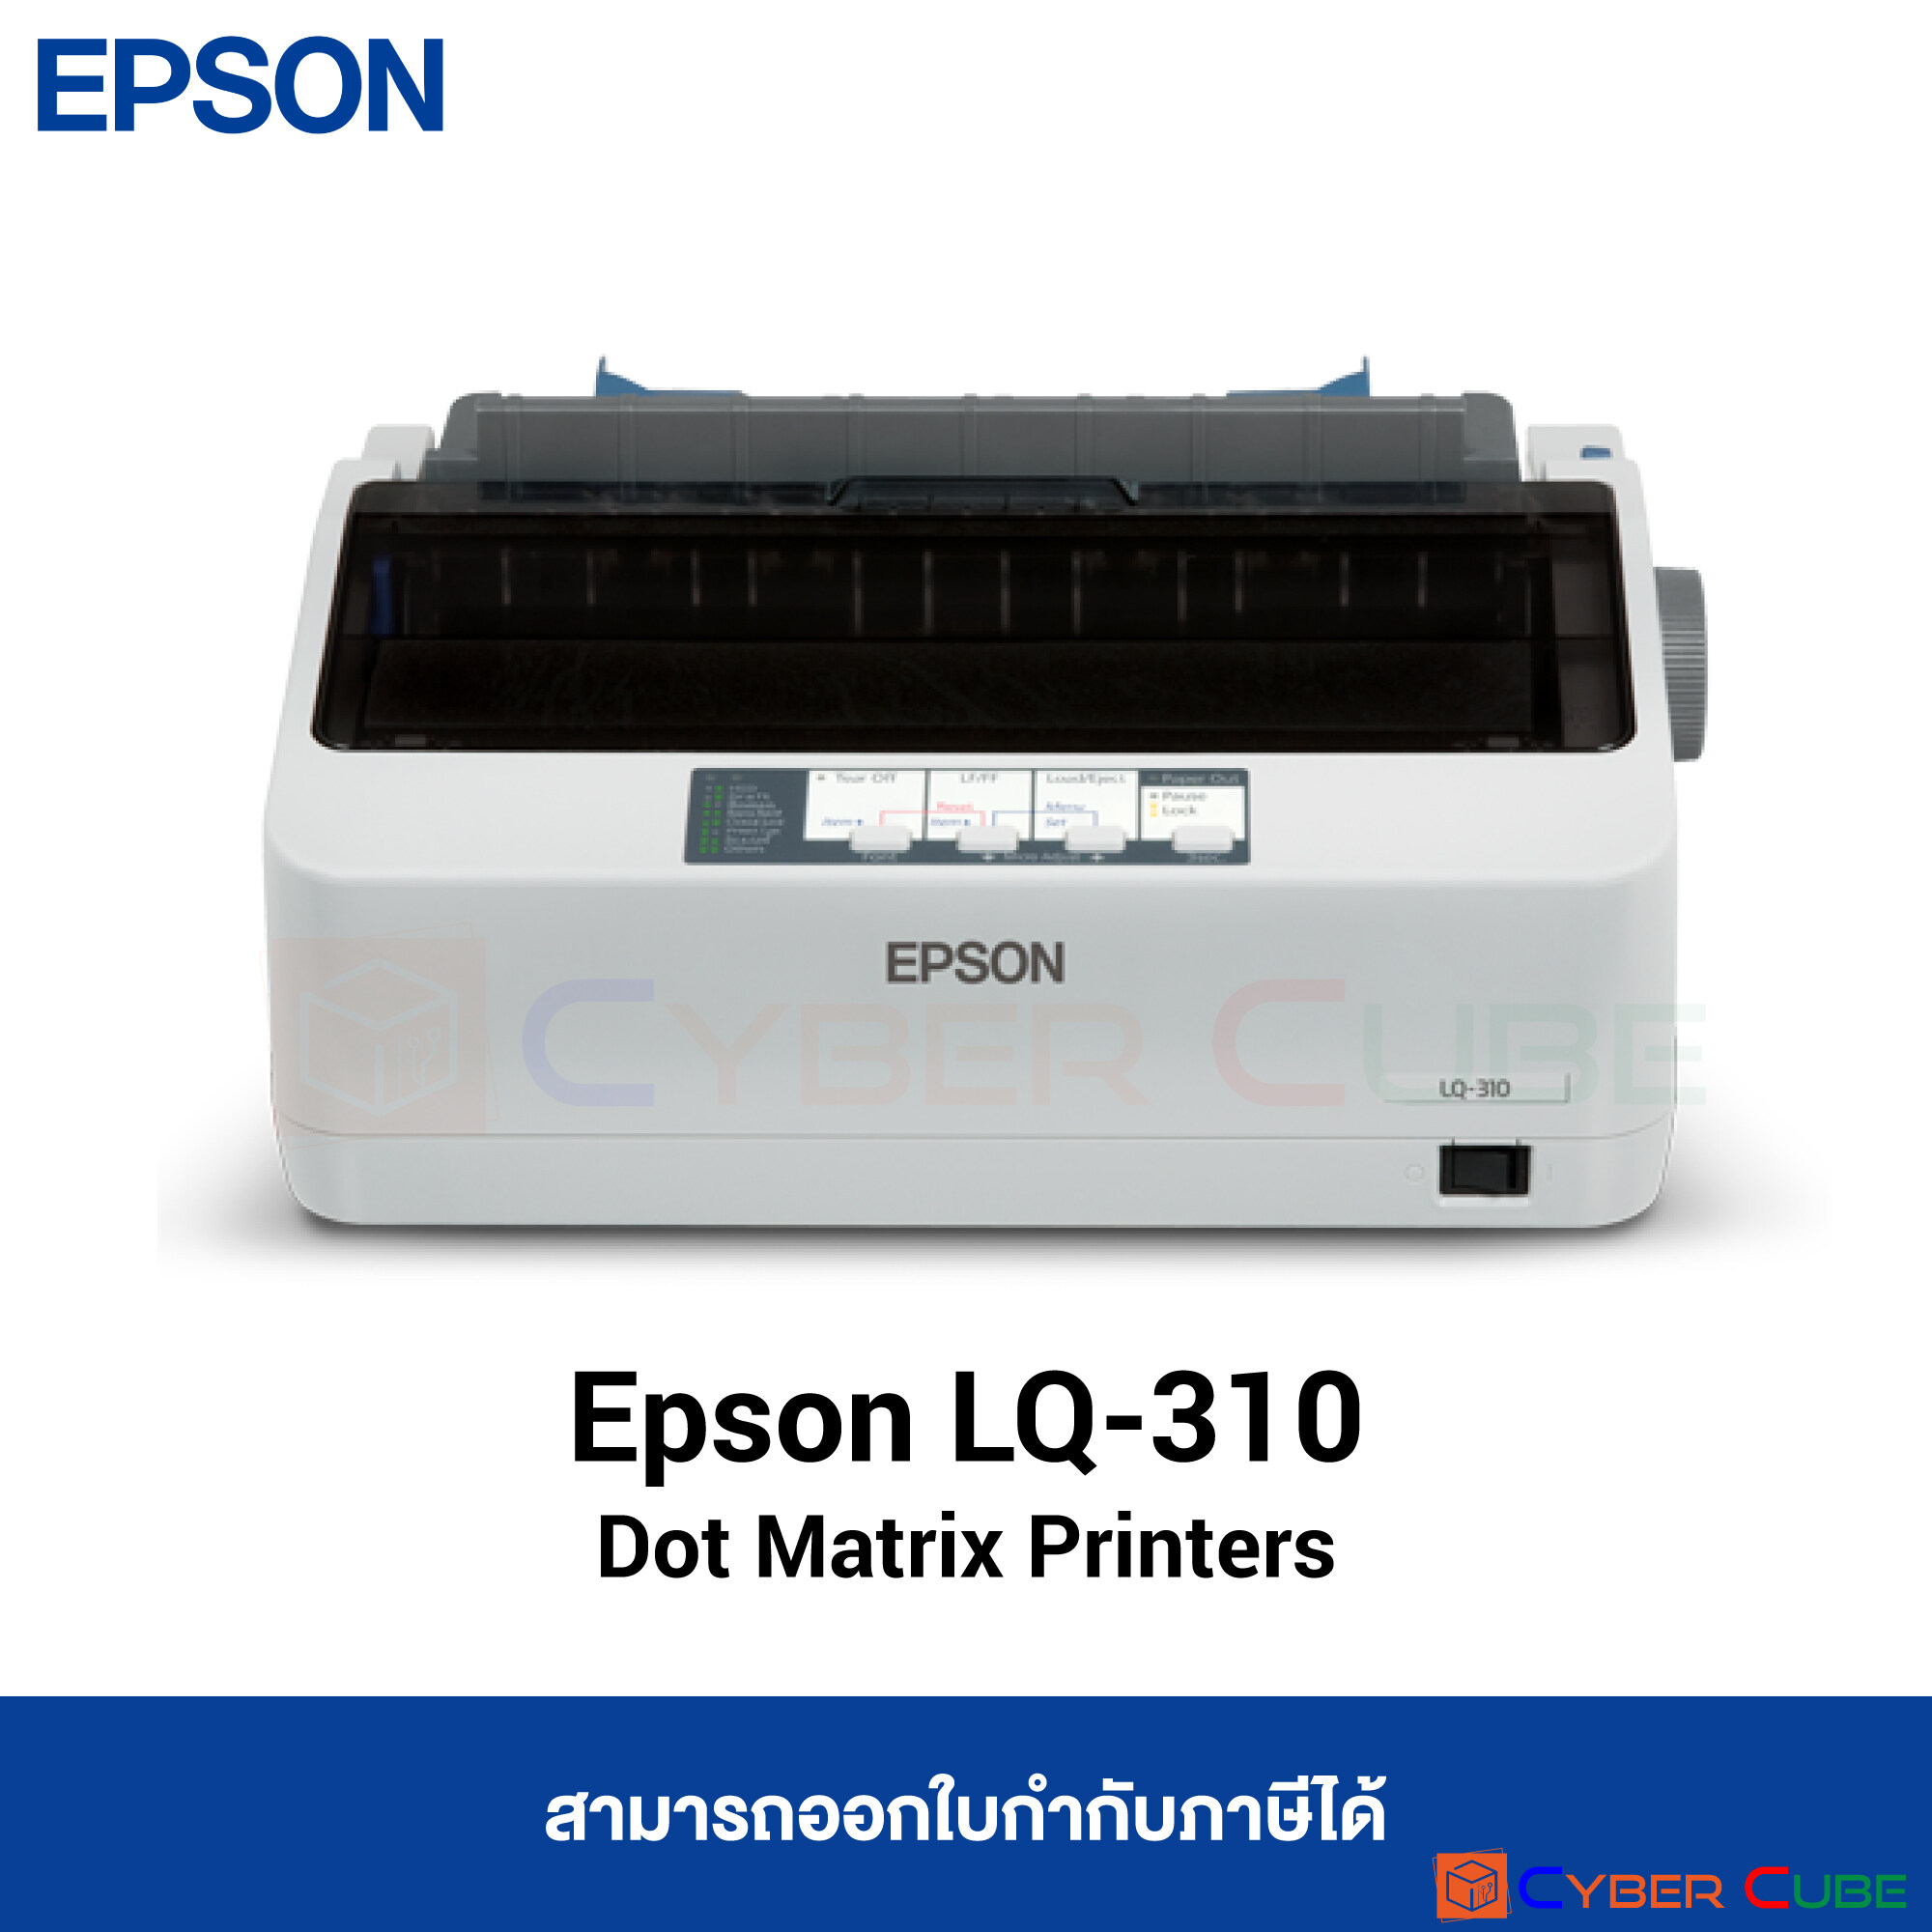 Epson LQ-310 Dot Matrix Printers (24-pin narrow, 1 org + 3 copies) - USB Interface / เครื่องพิมพ์ดอตแมทริกซ์ 4 ชั้น (1 ต้นฉบับ + 3 สำเนา), เชื่อมต่อด้วยพอร์ต USB